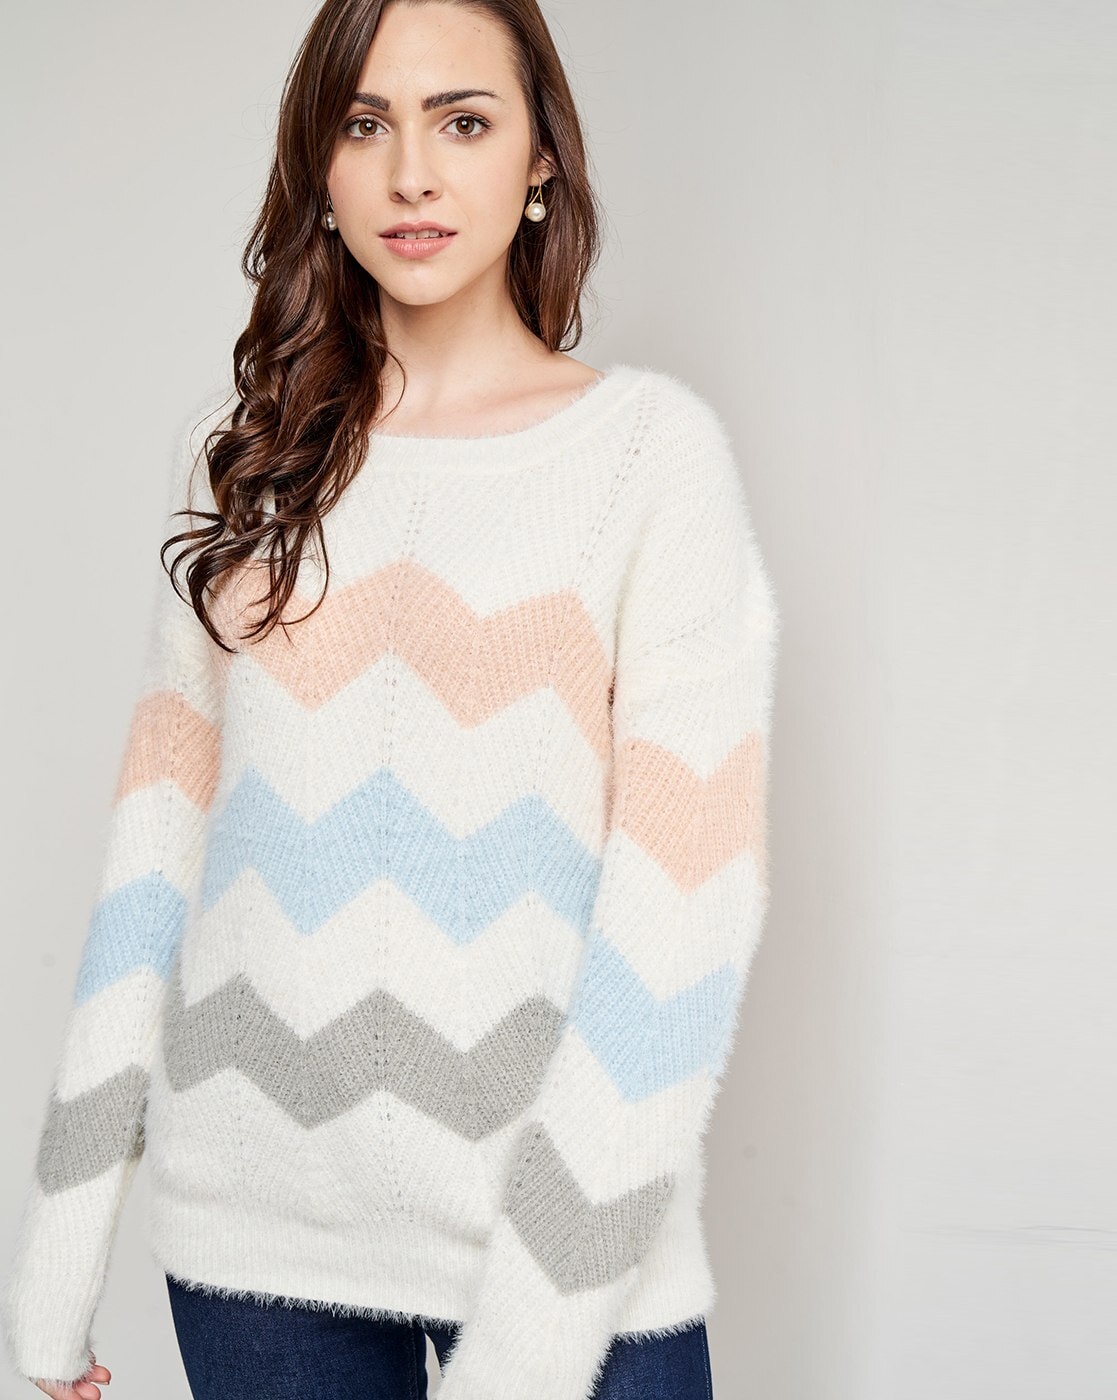 Buy White Longline Tunic With Crochet Bralette, Knitted Merino